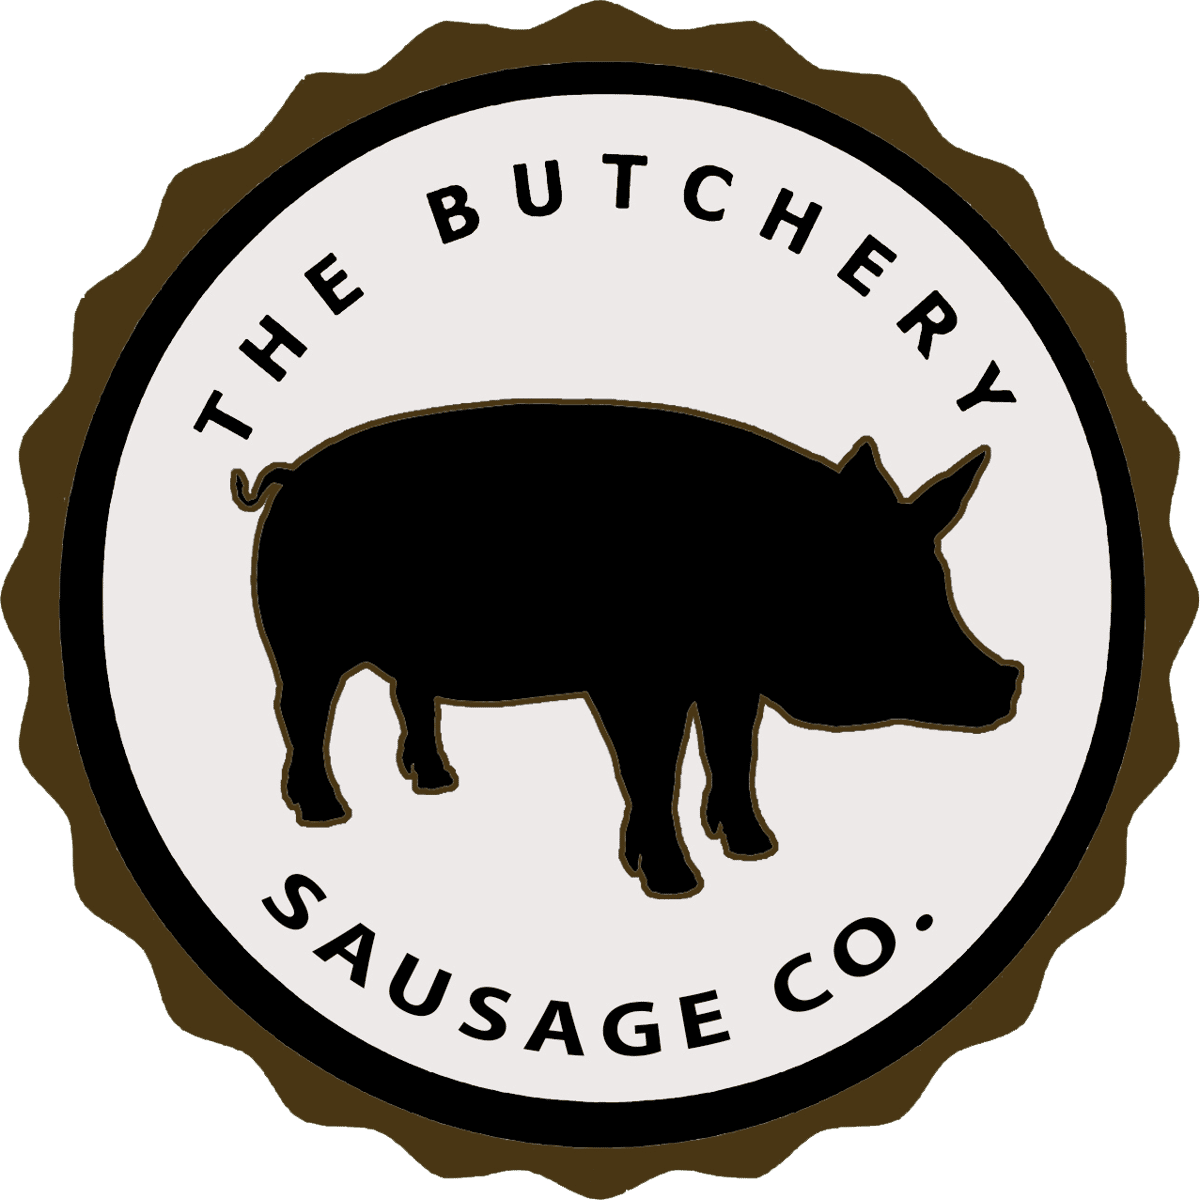 The Butchery Sausage Co.